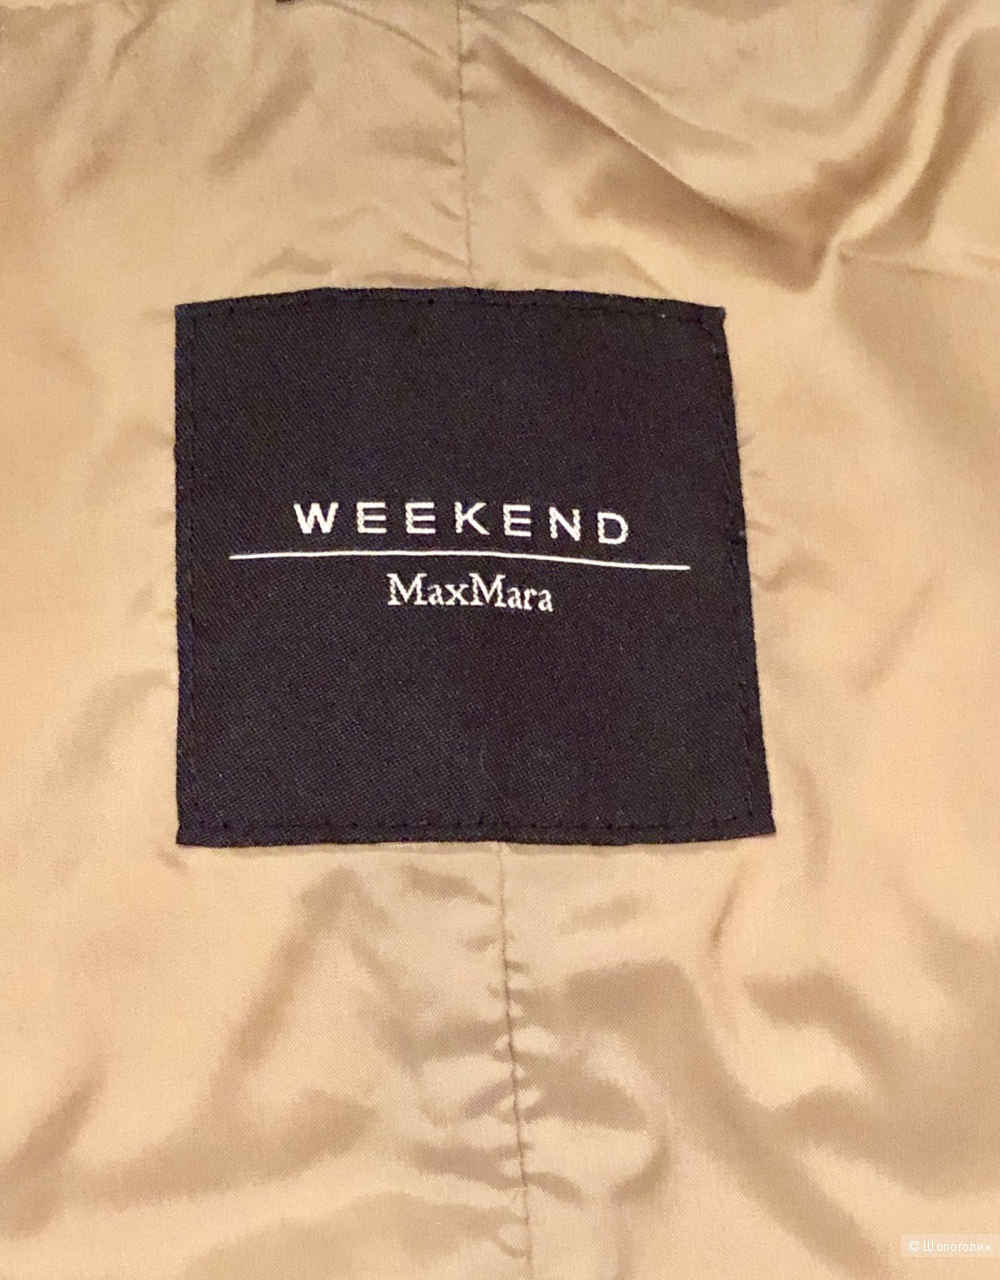 Пуховик Max Mara Weekend,,размер 42-44.